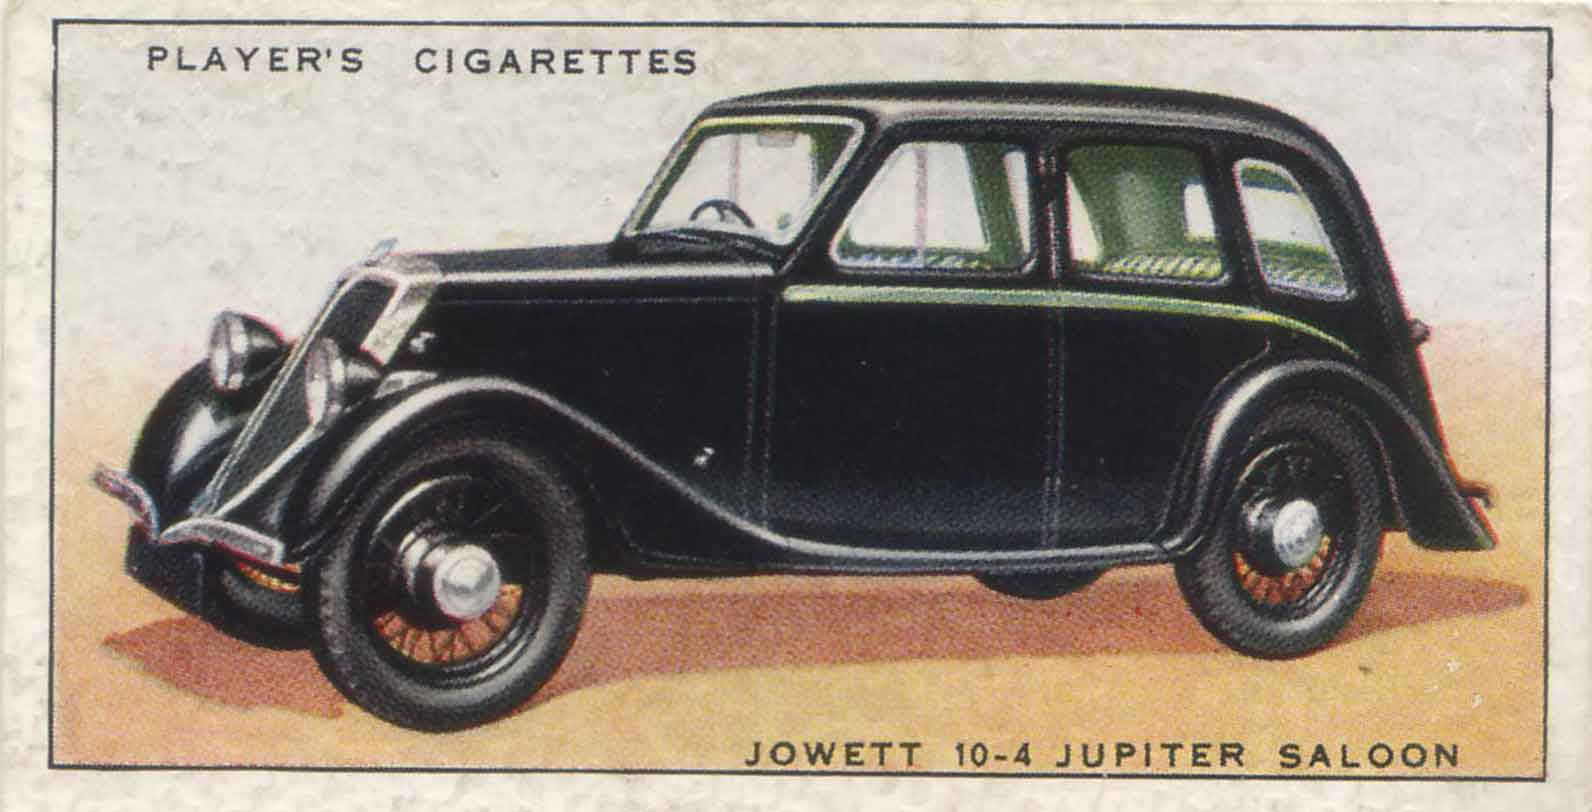 Jowlett 10-4 Jupiter Saloon. 1937 cigarette card.